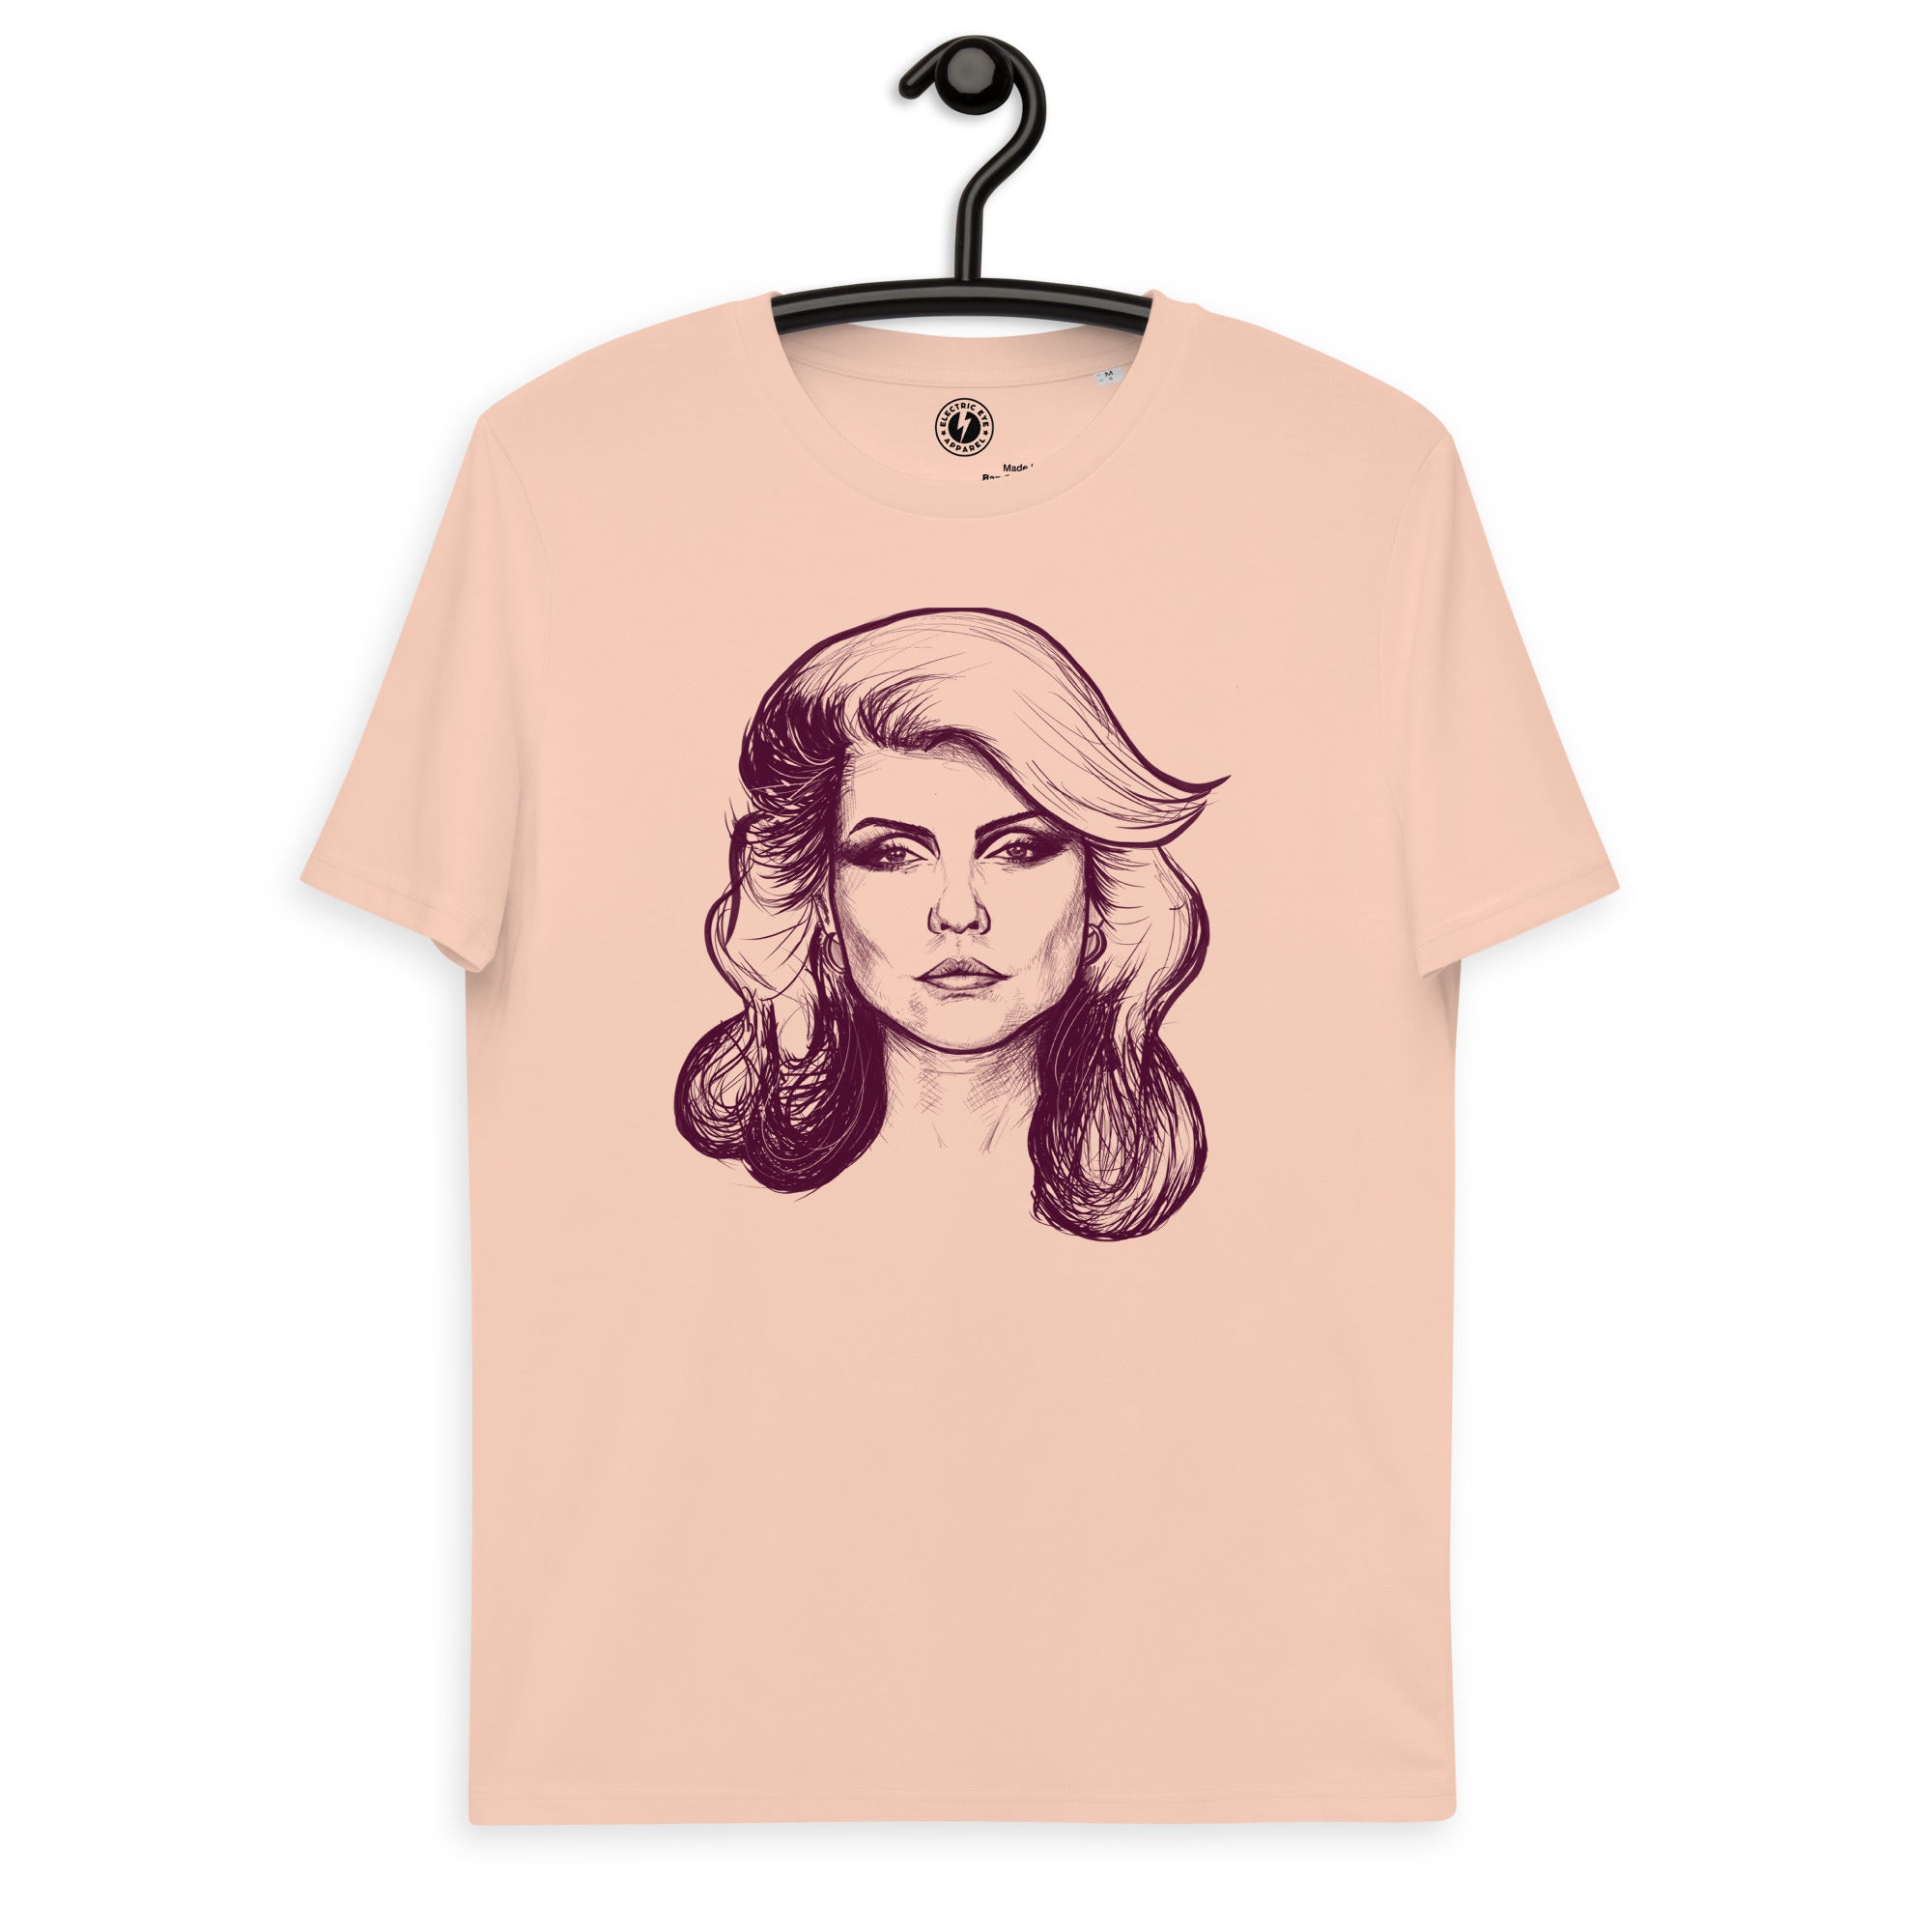 Debbie Harry Blondie Vintage Style Pop Art Drawing - Premium Printed Unisex soft organic cotton t-shirt - deep pink print